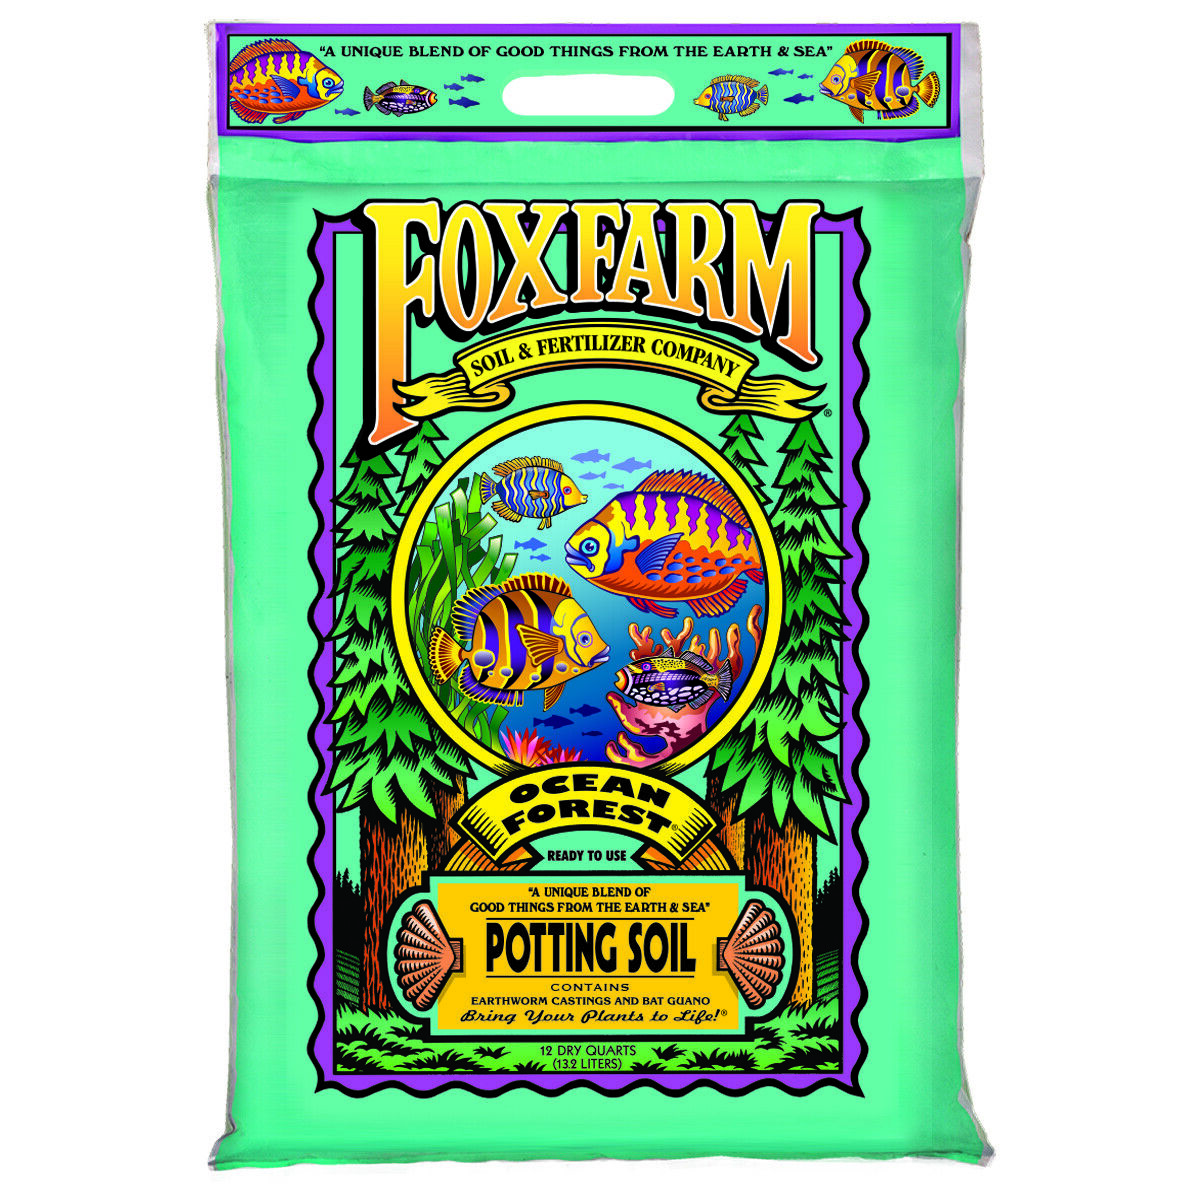 Foxfarm FX14053 Ocean Forest Garden Potting Soil Bag 6.3-6.8 pH, 12 Quarts